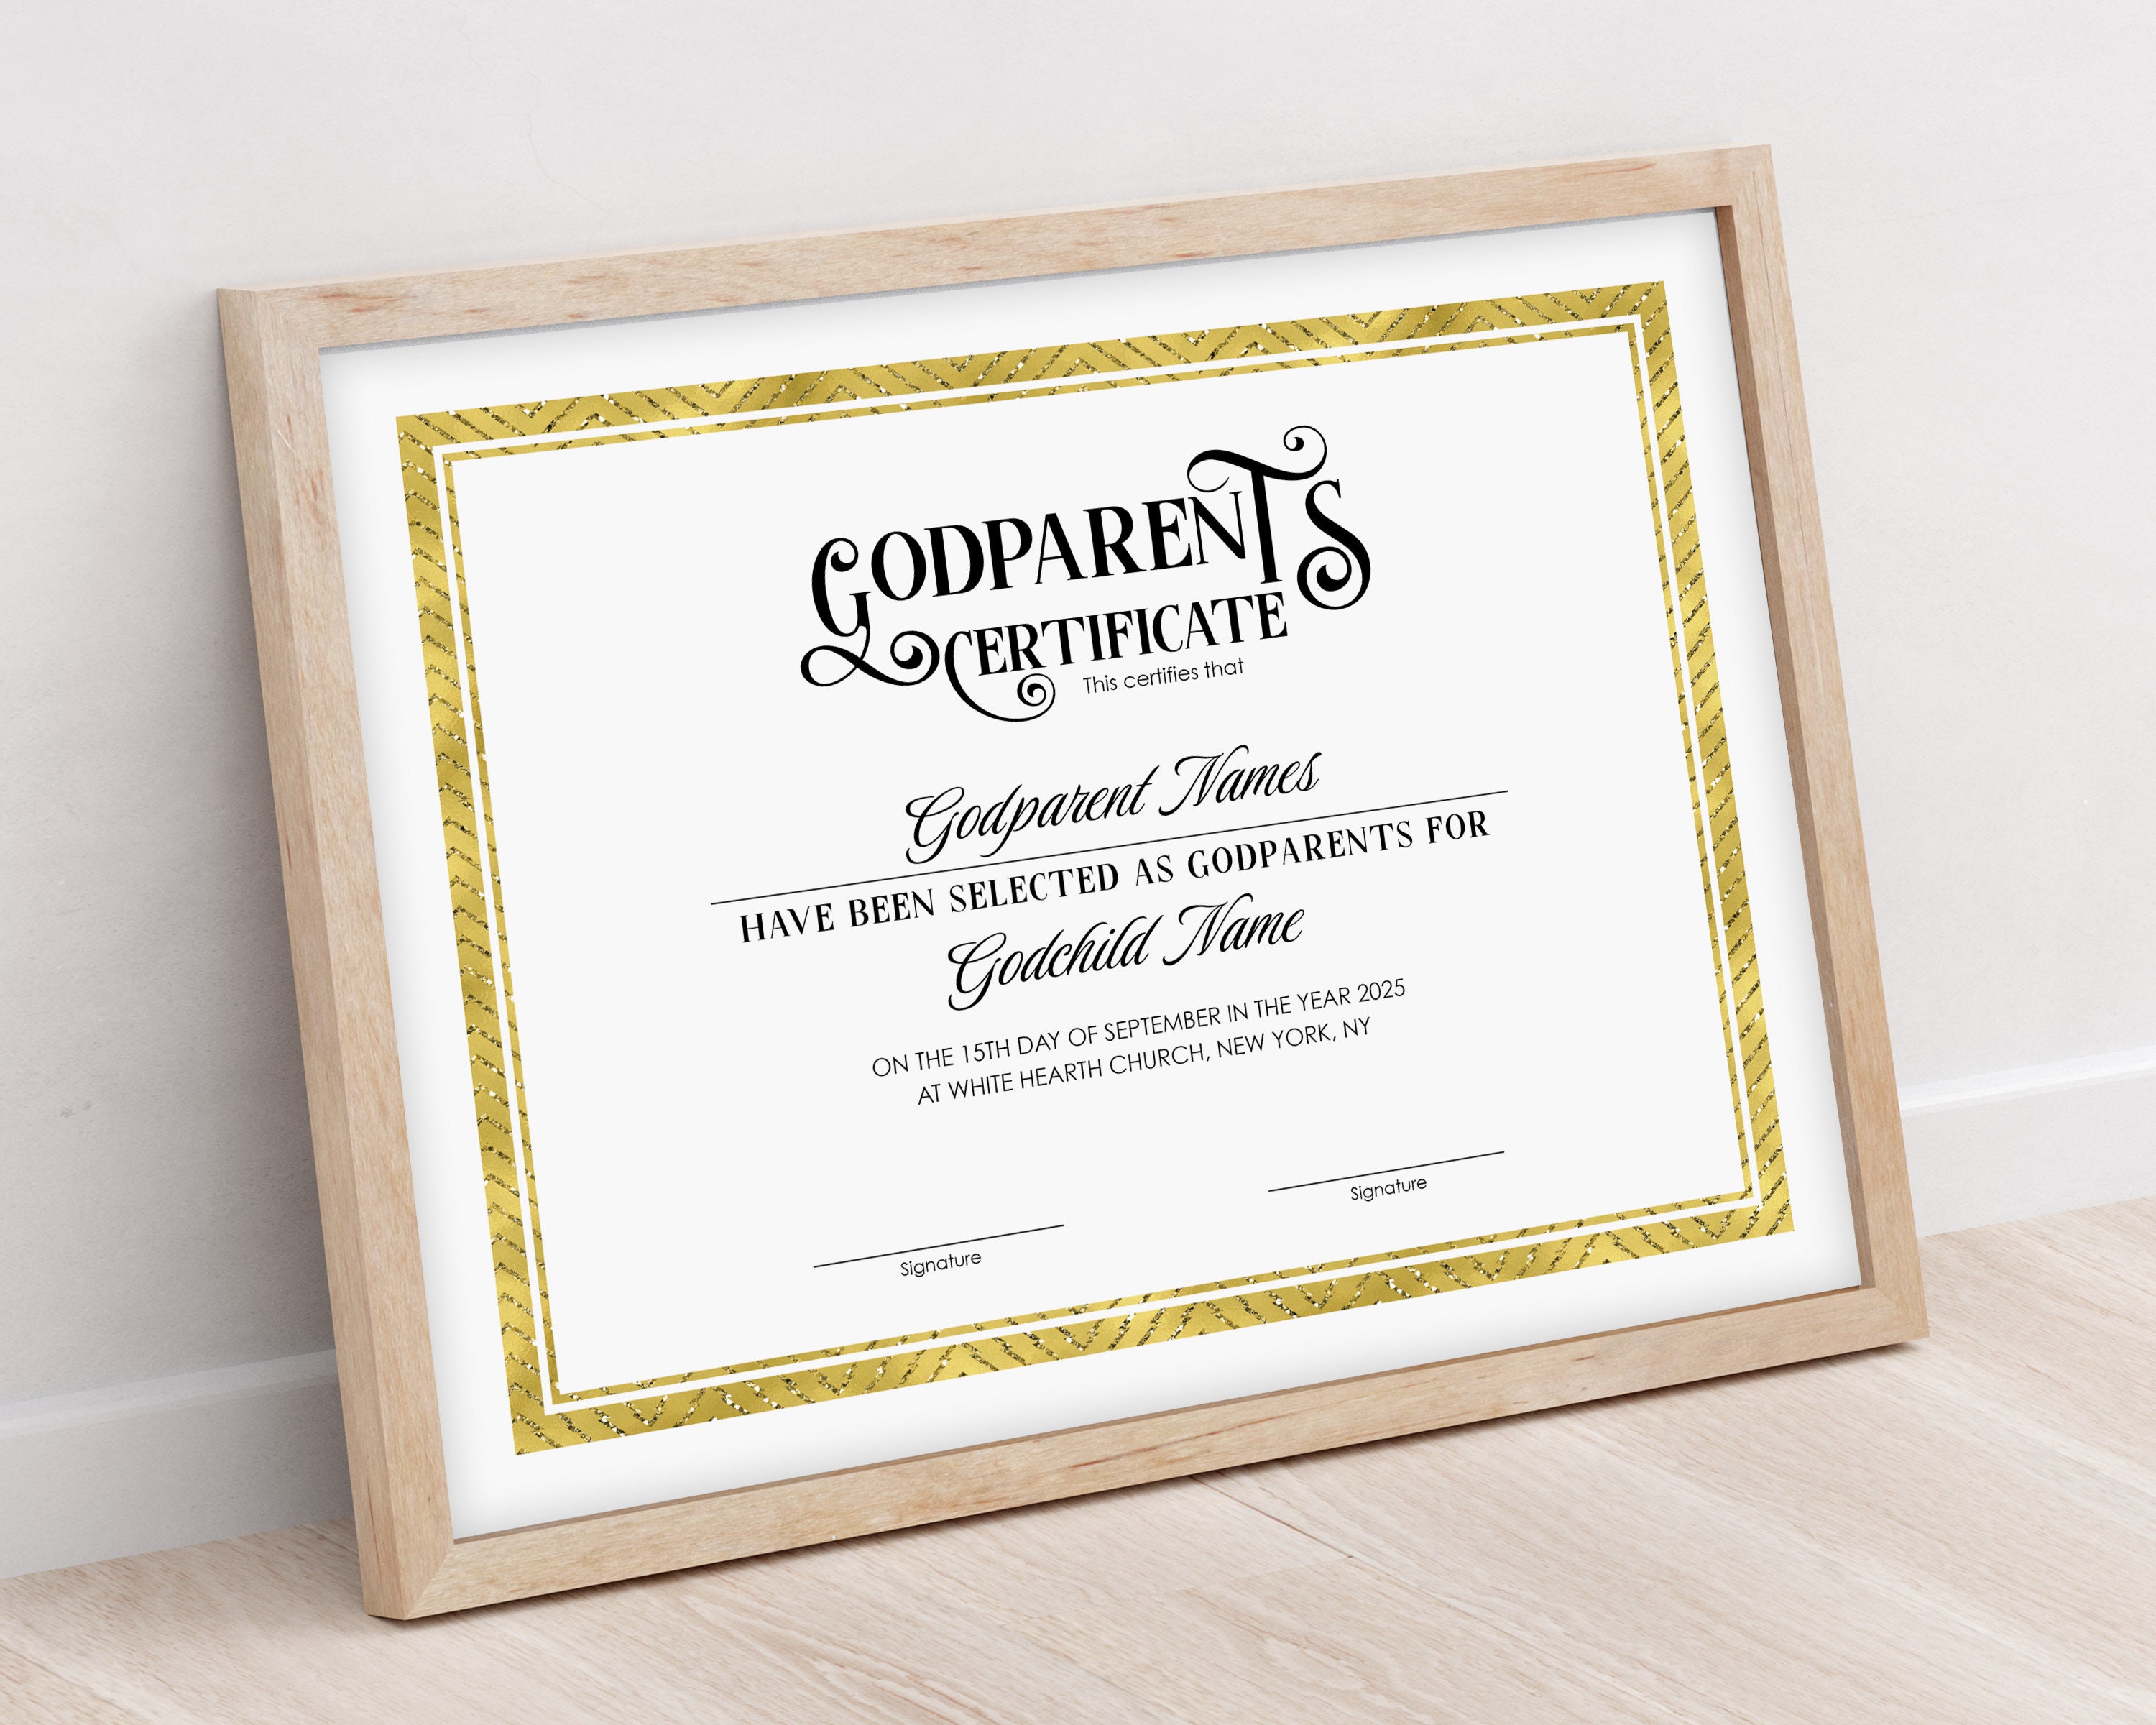 Do Godparents Get A Certificate